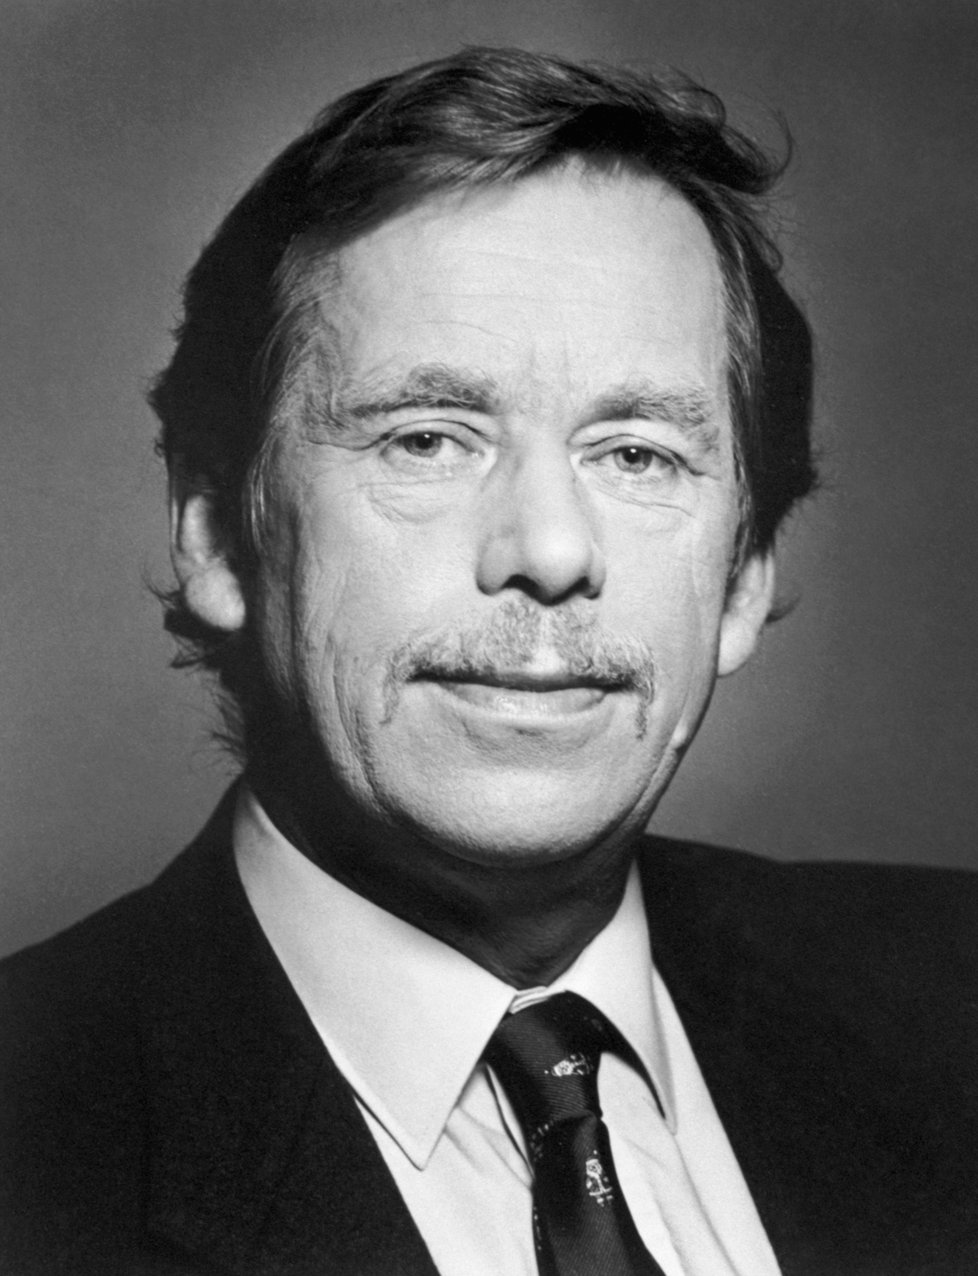 Prezident Václav Havel: 1989-1992 (Československo) a 2003-2019 (ČR)